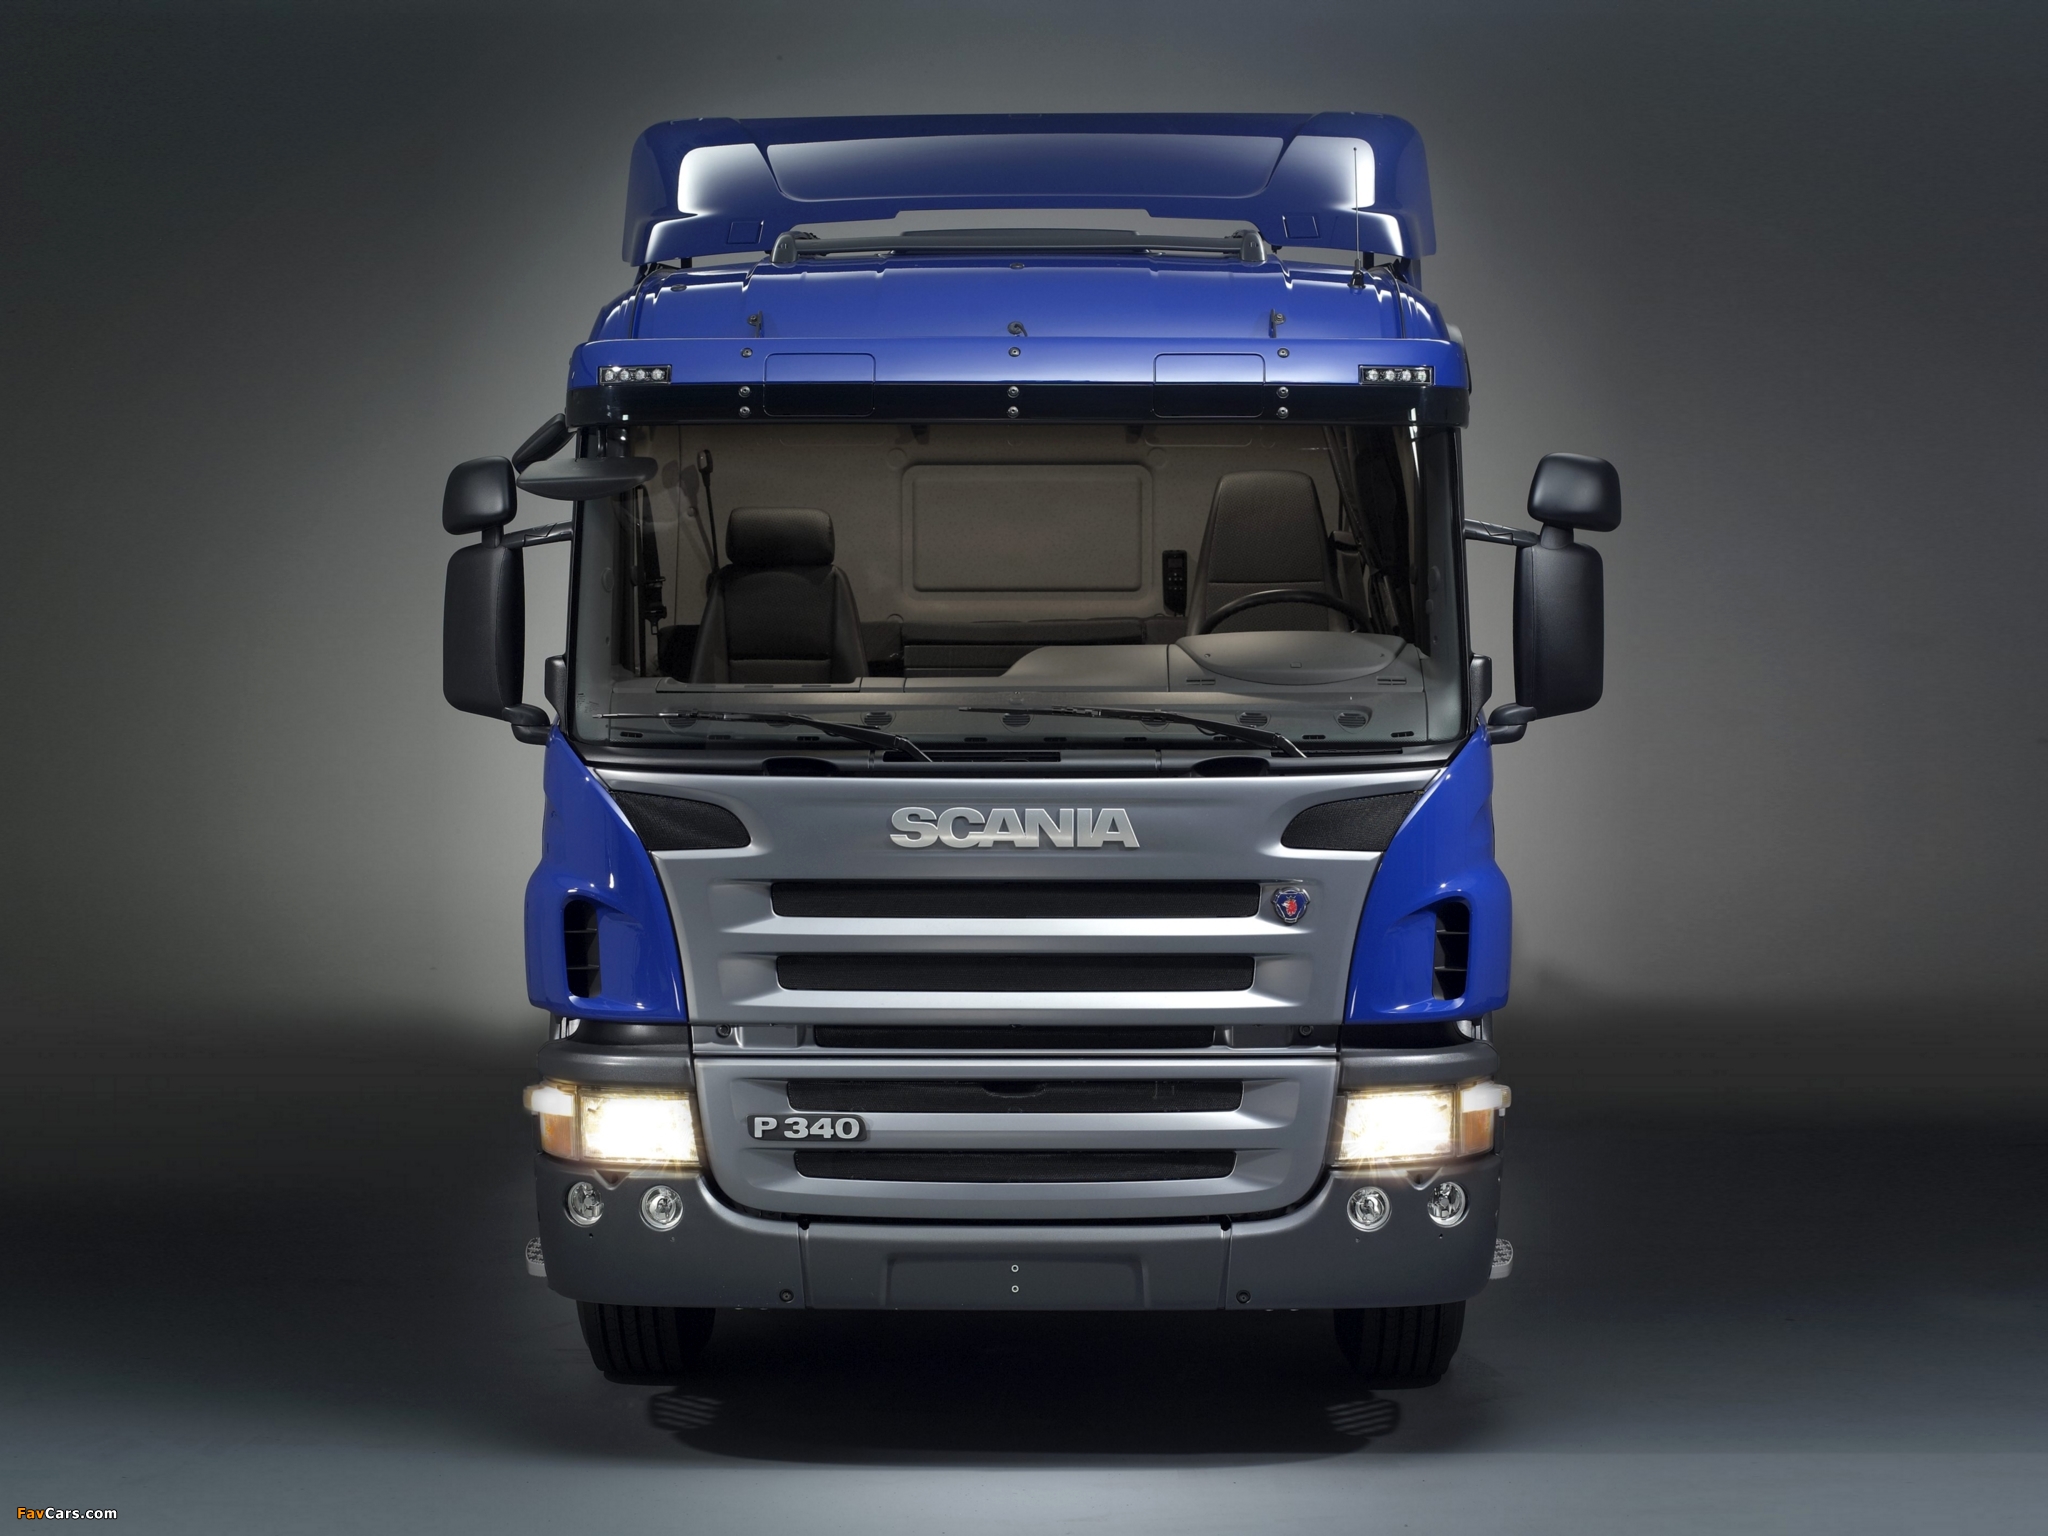 Scania p series